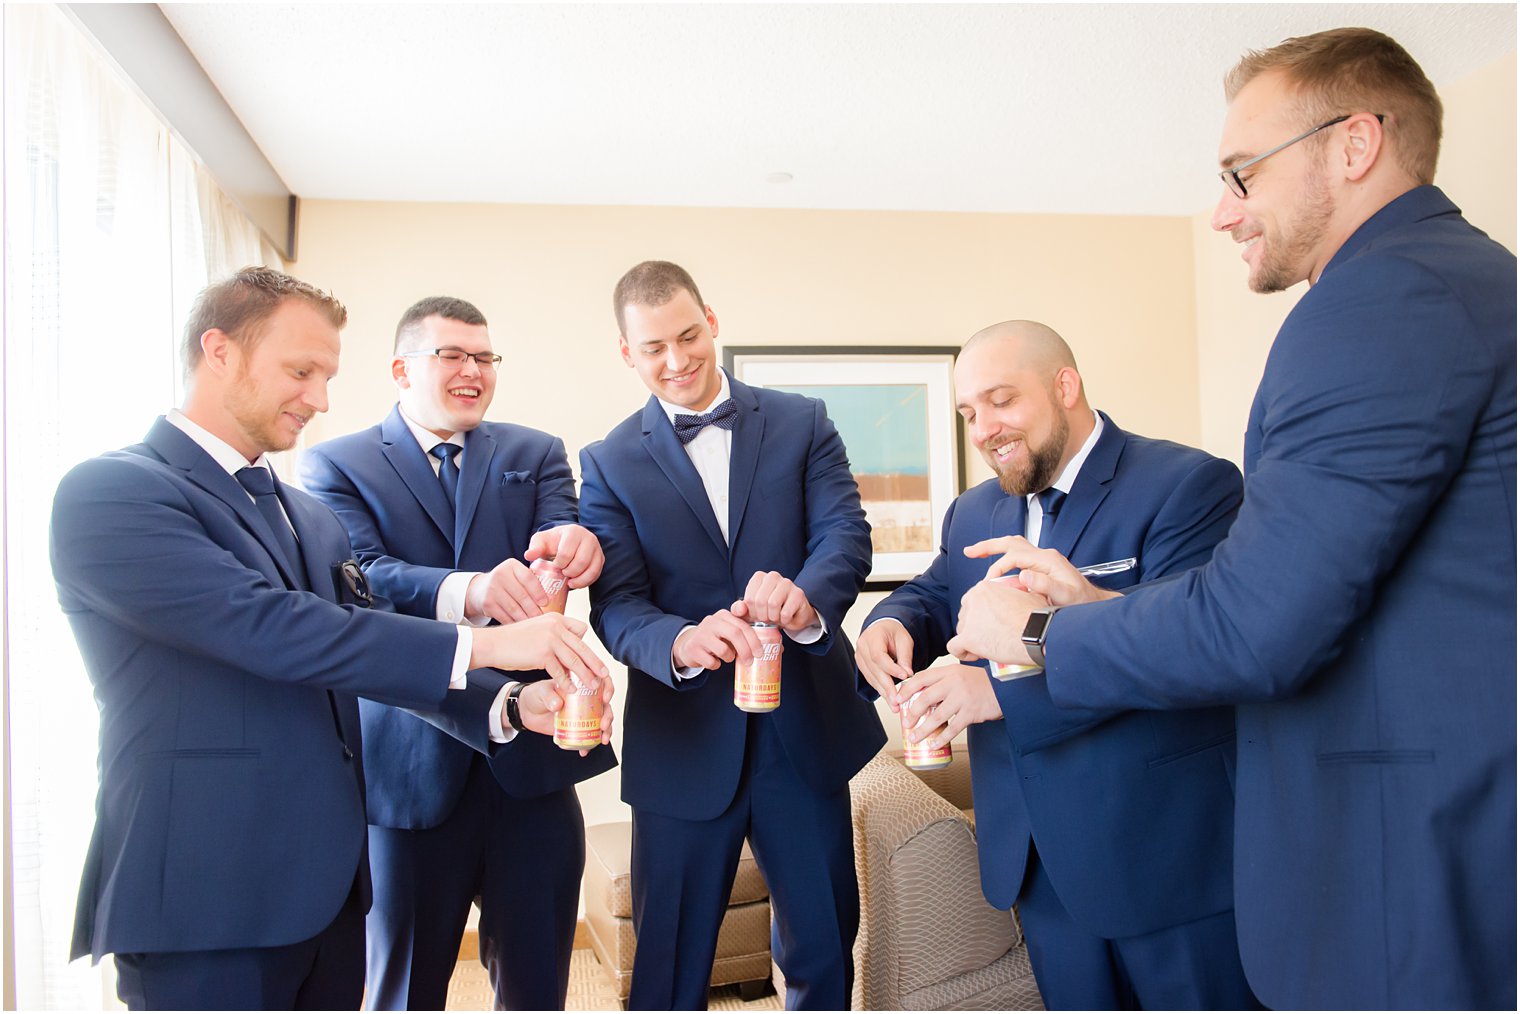 Groom and groomsmen toasting before wedding day